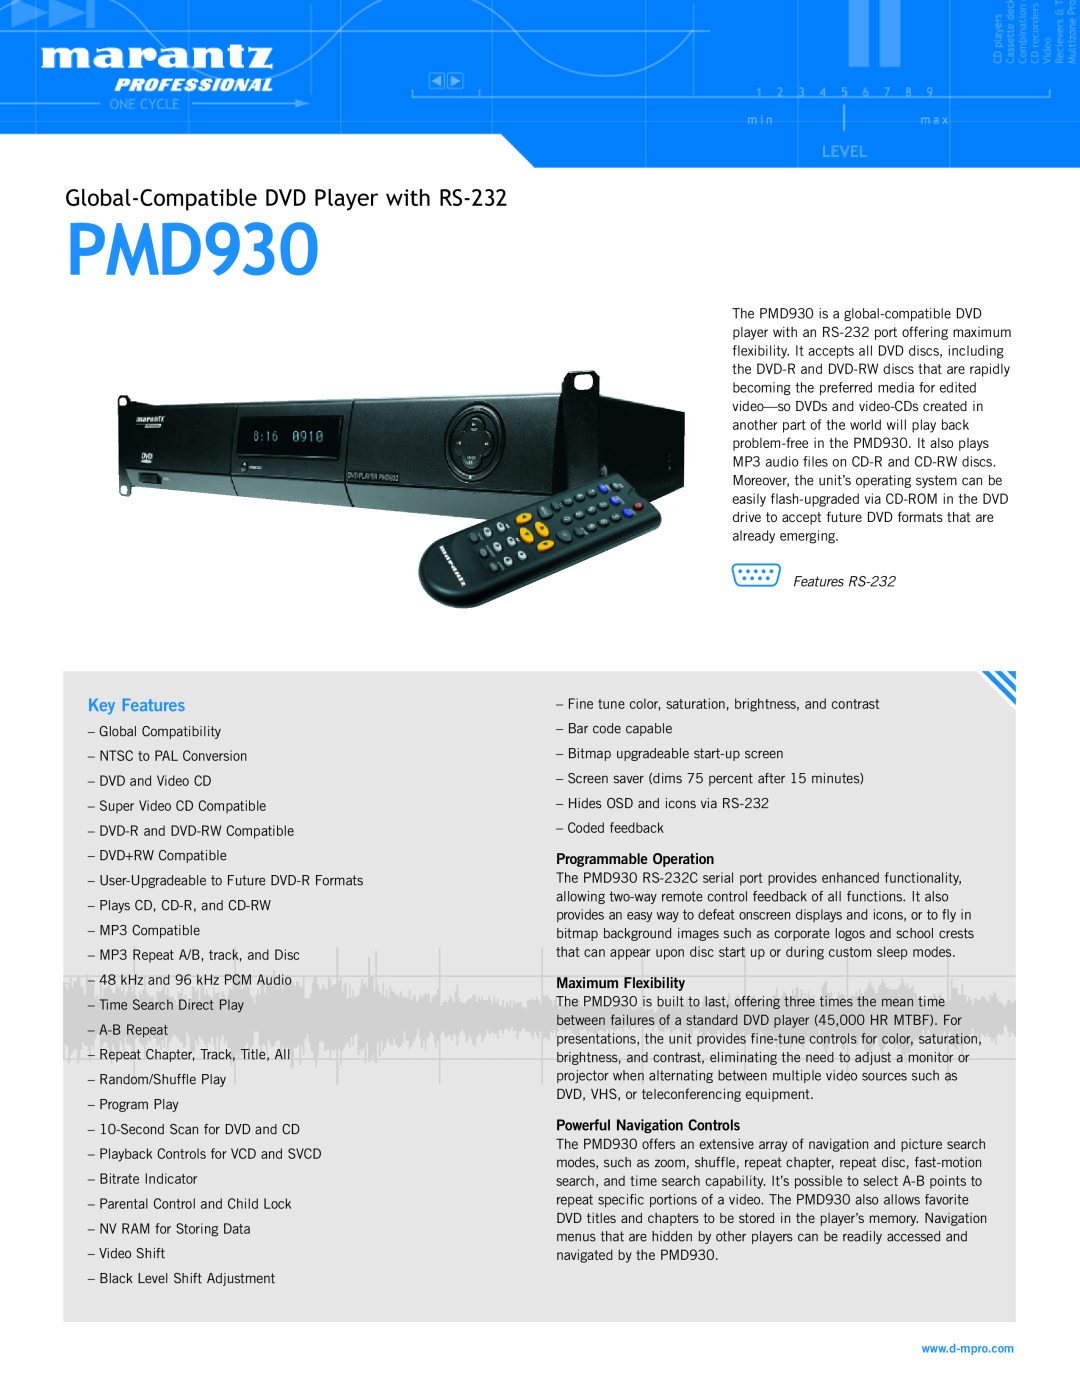 Marantz PMD930 RS-232C manual Programmable Operation, Maximum Flexibility, Powerful Navigation Controls, Key Features 